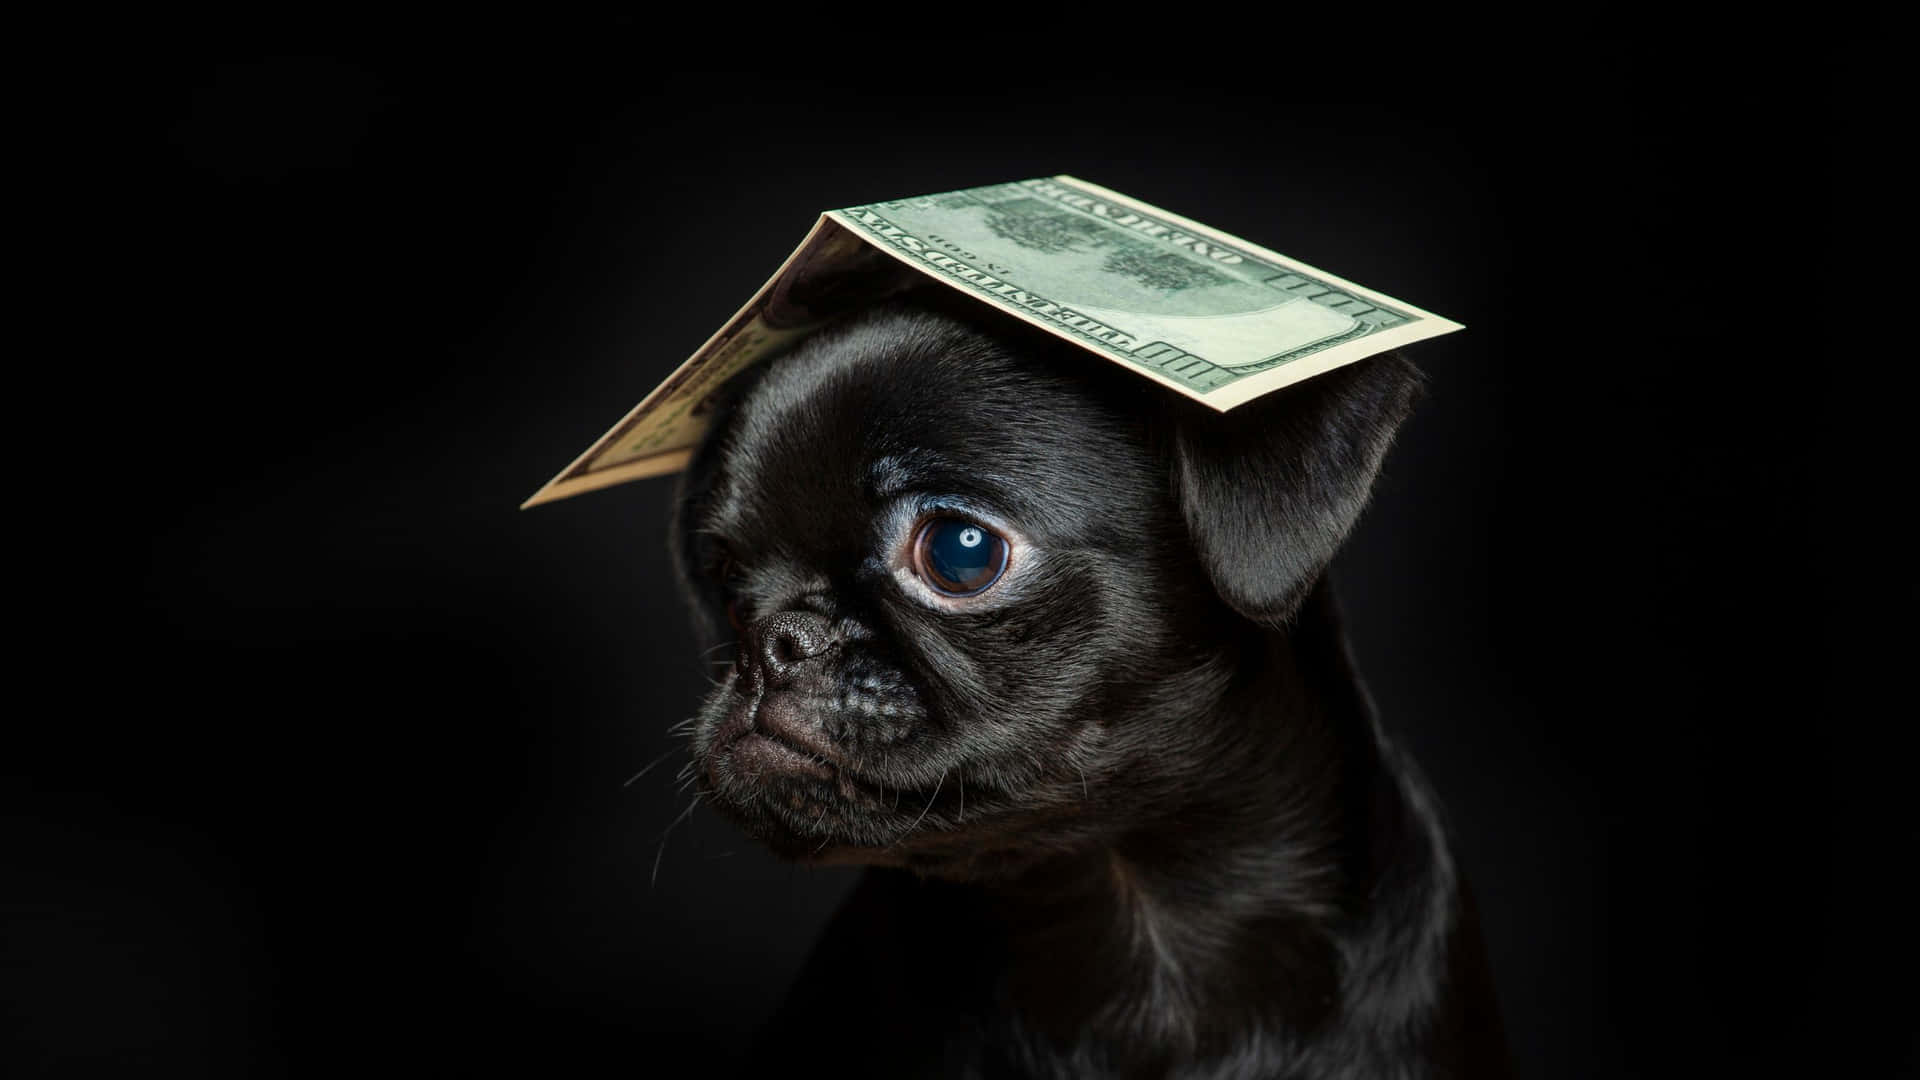 A Black Pug With A Dollar Bill On Its Head